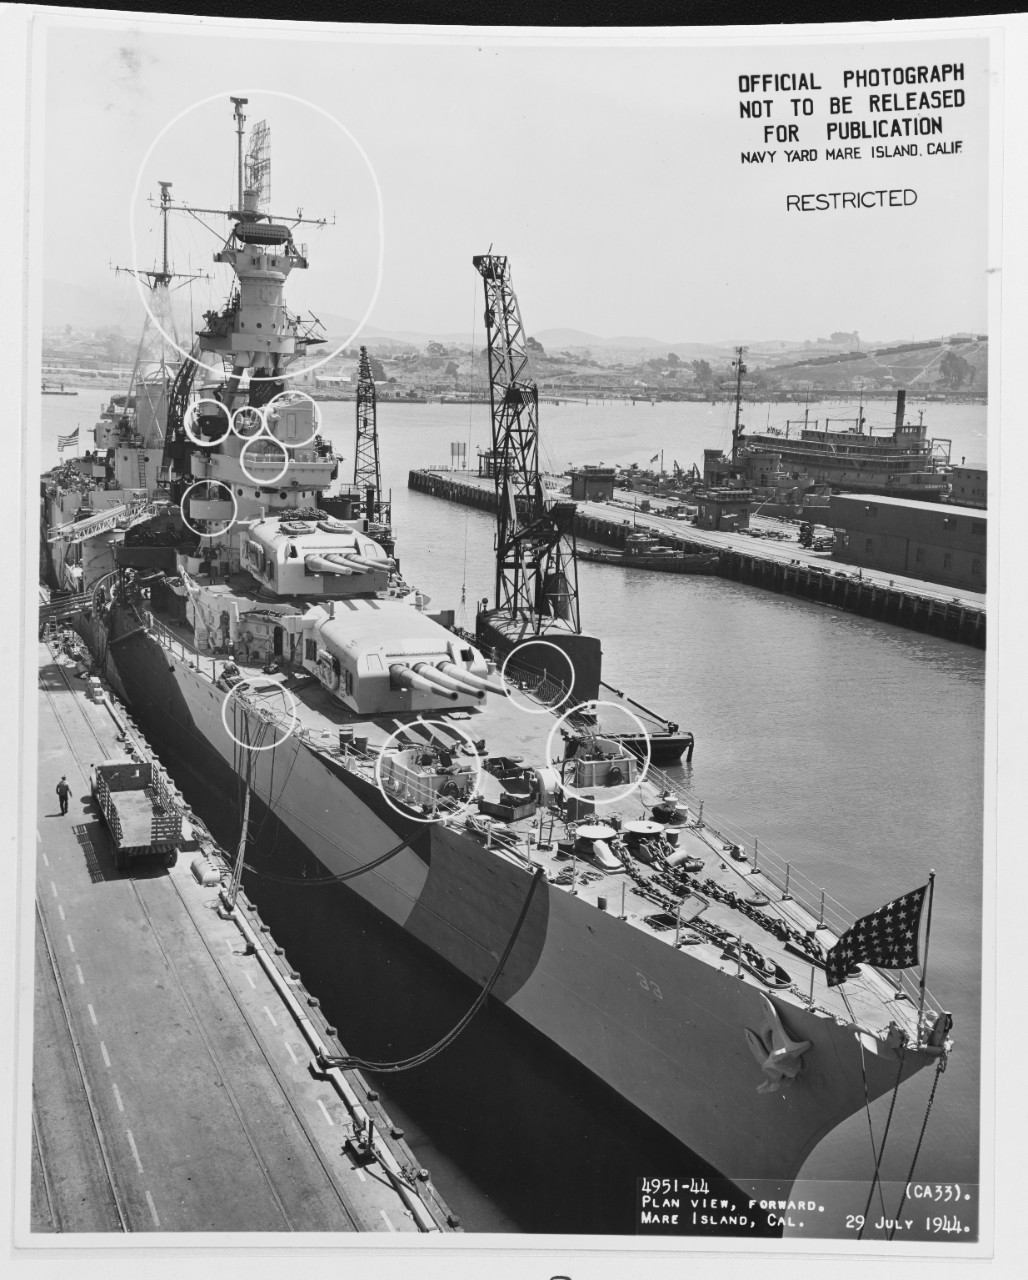 USS PORTLAND (CA-33)